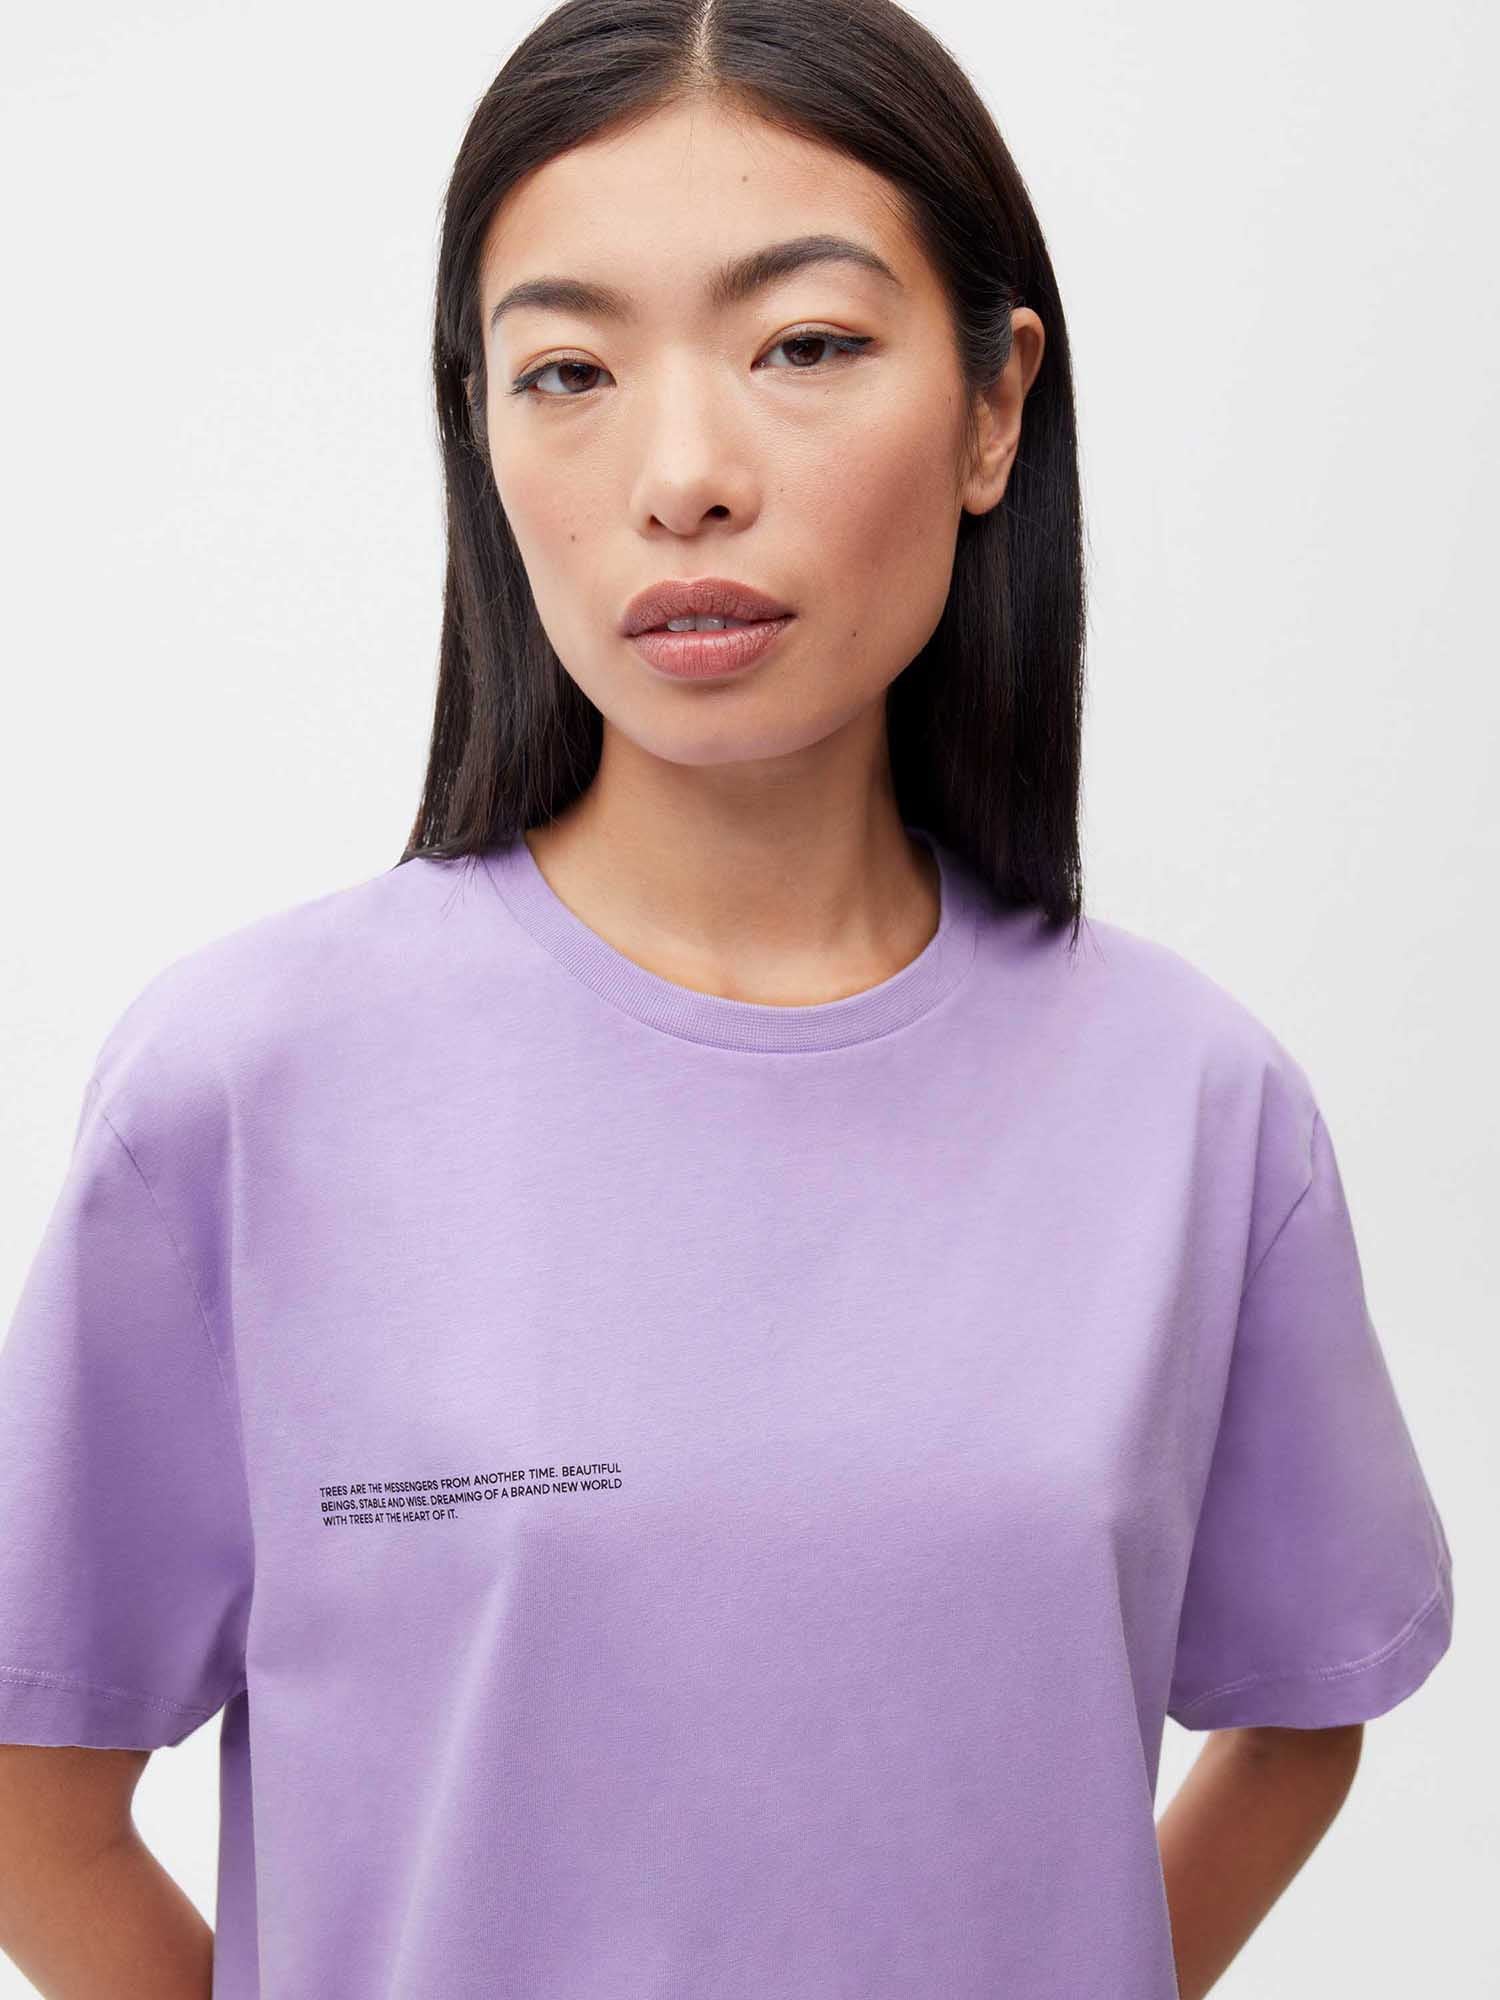 Pangaia-Kenny-Scharf-Organic-Cotton-T-Shirt-Paradis-Perdu-Orchid-Purple-Female-2